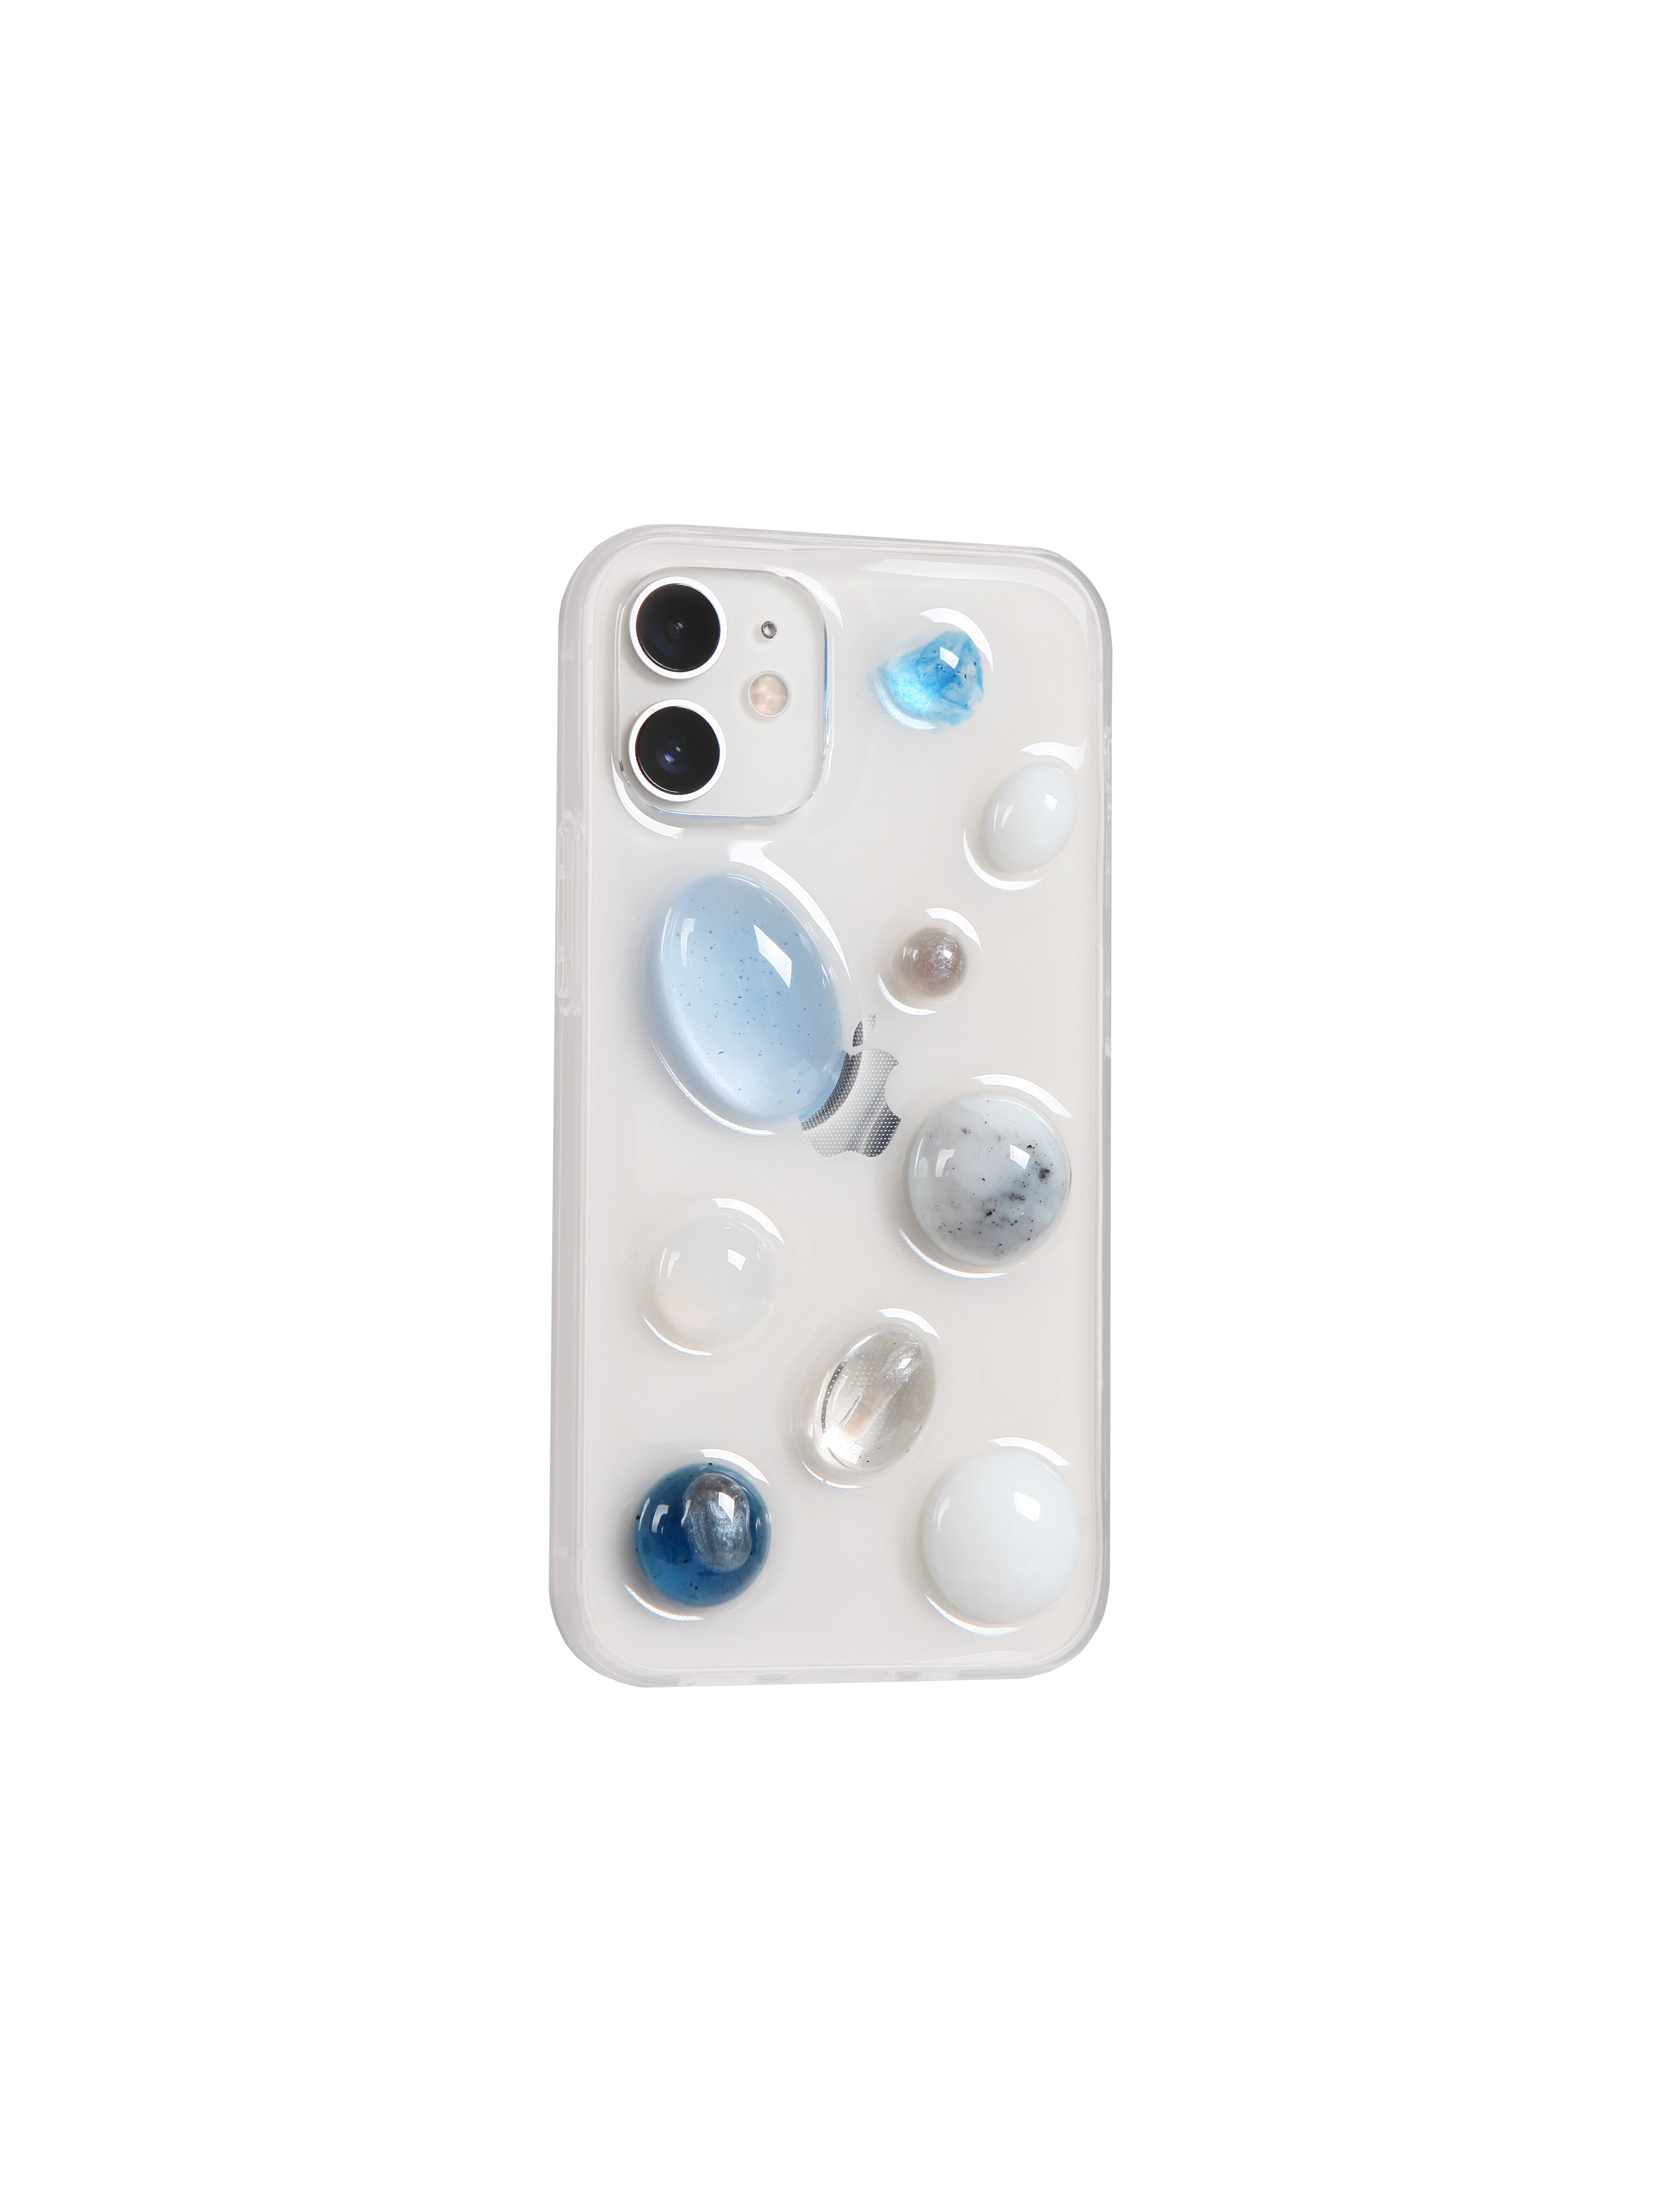 #002 iphone resin case